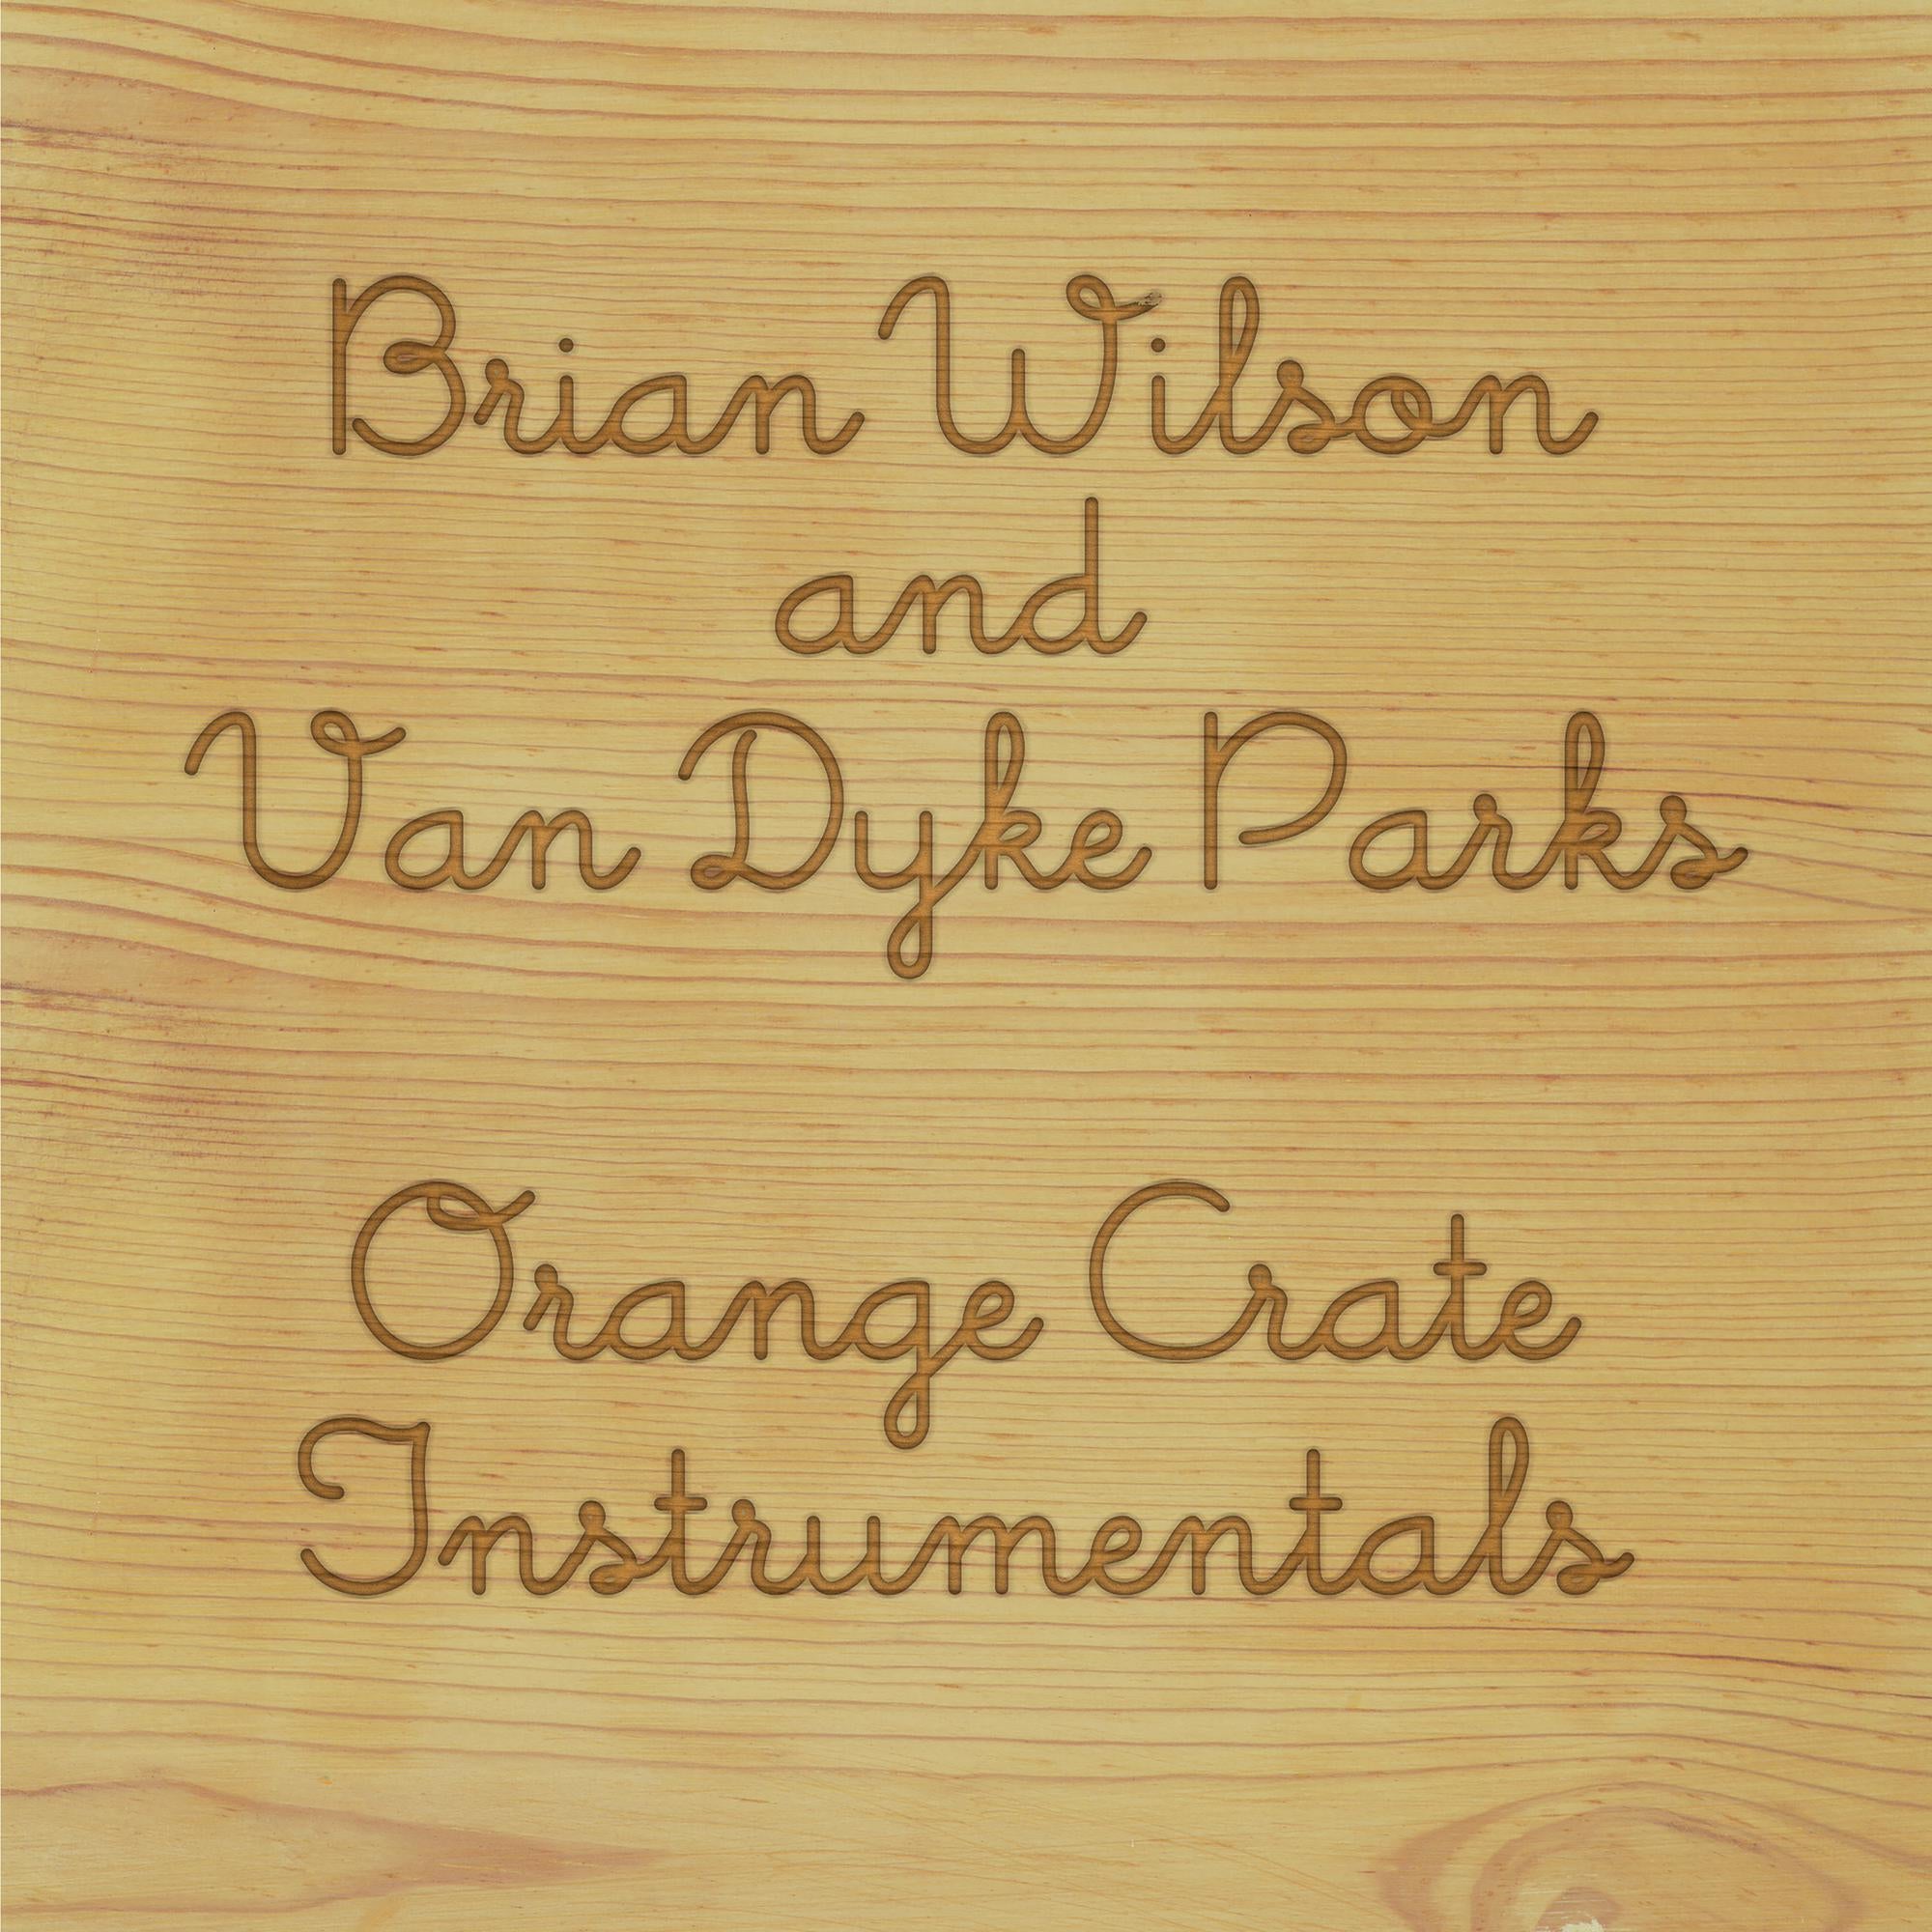 BRIAN WILSON & VAN DYKE PARKS - ORANGE CRATE INSTRUMENTALS Vinyl LP